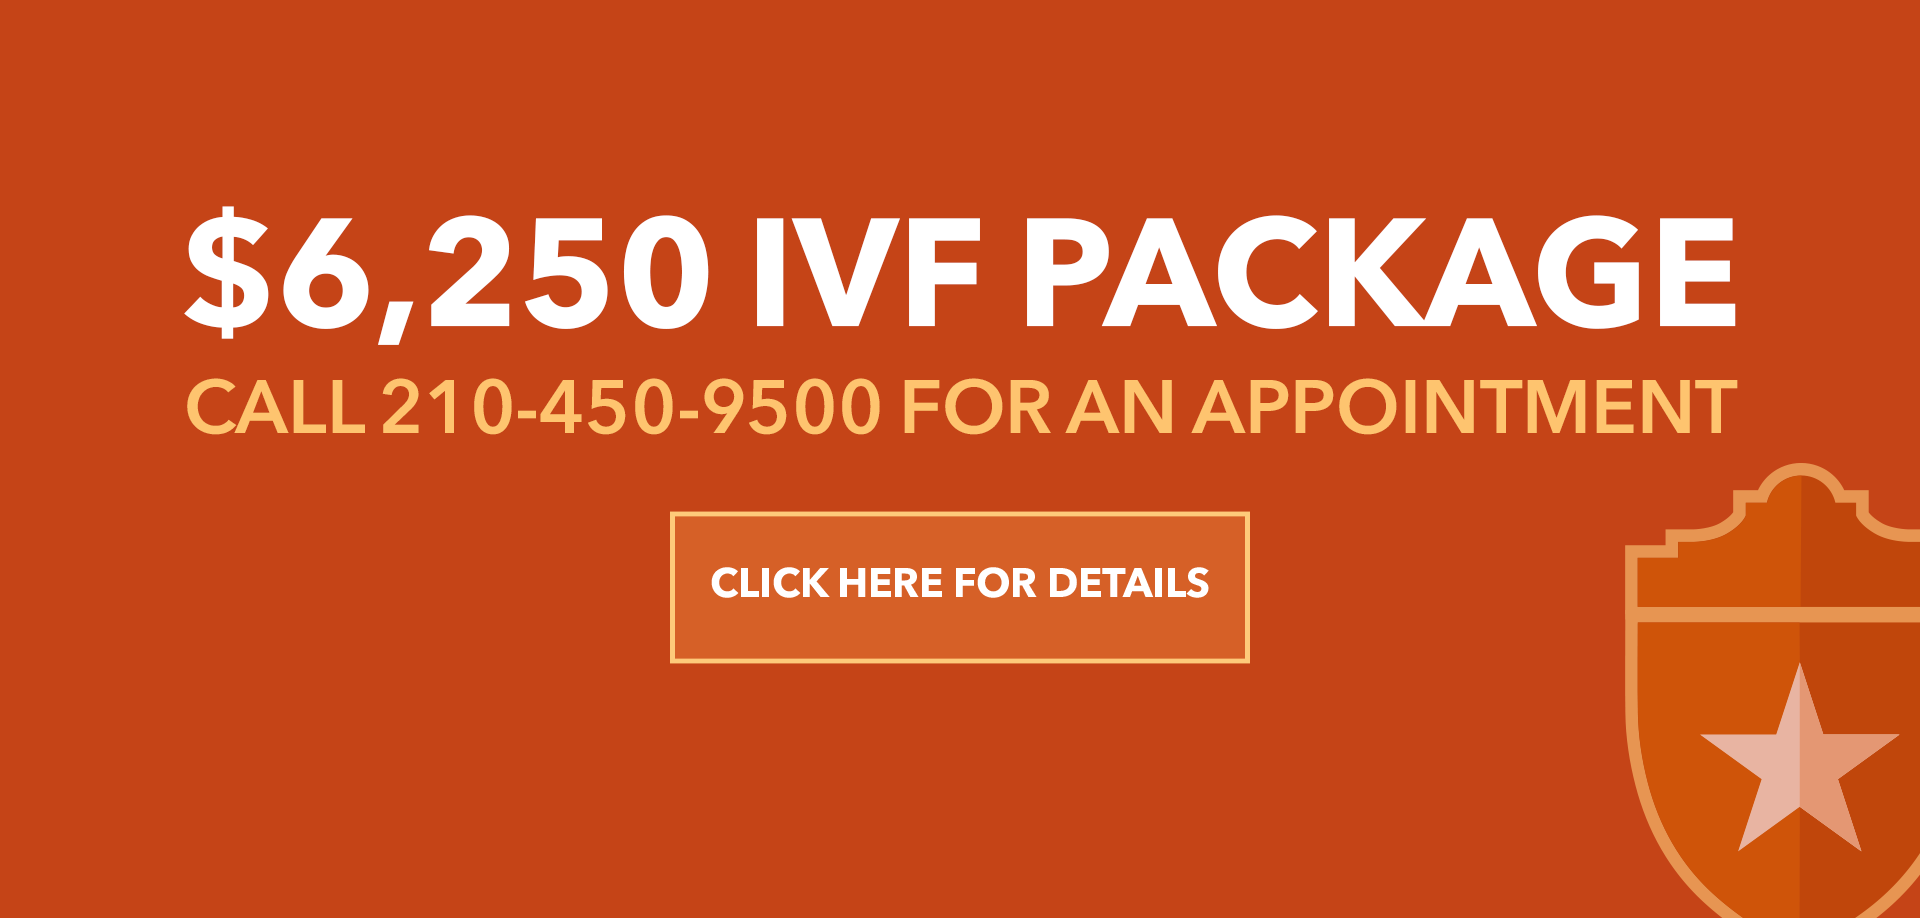 ivf treatment price